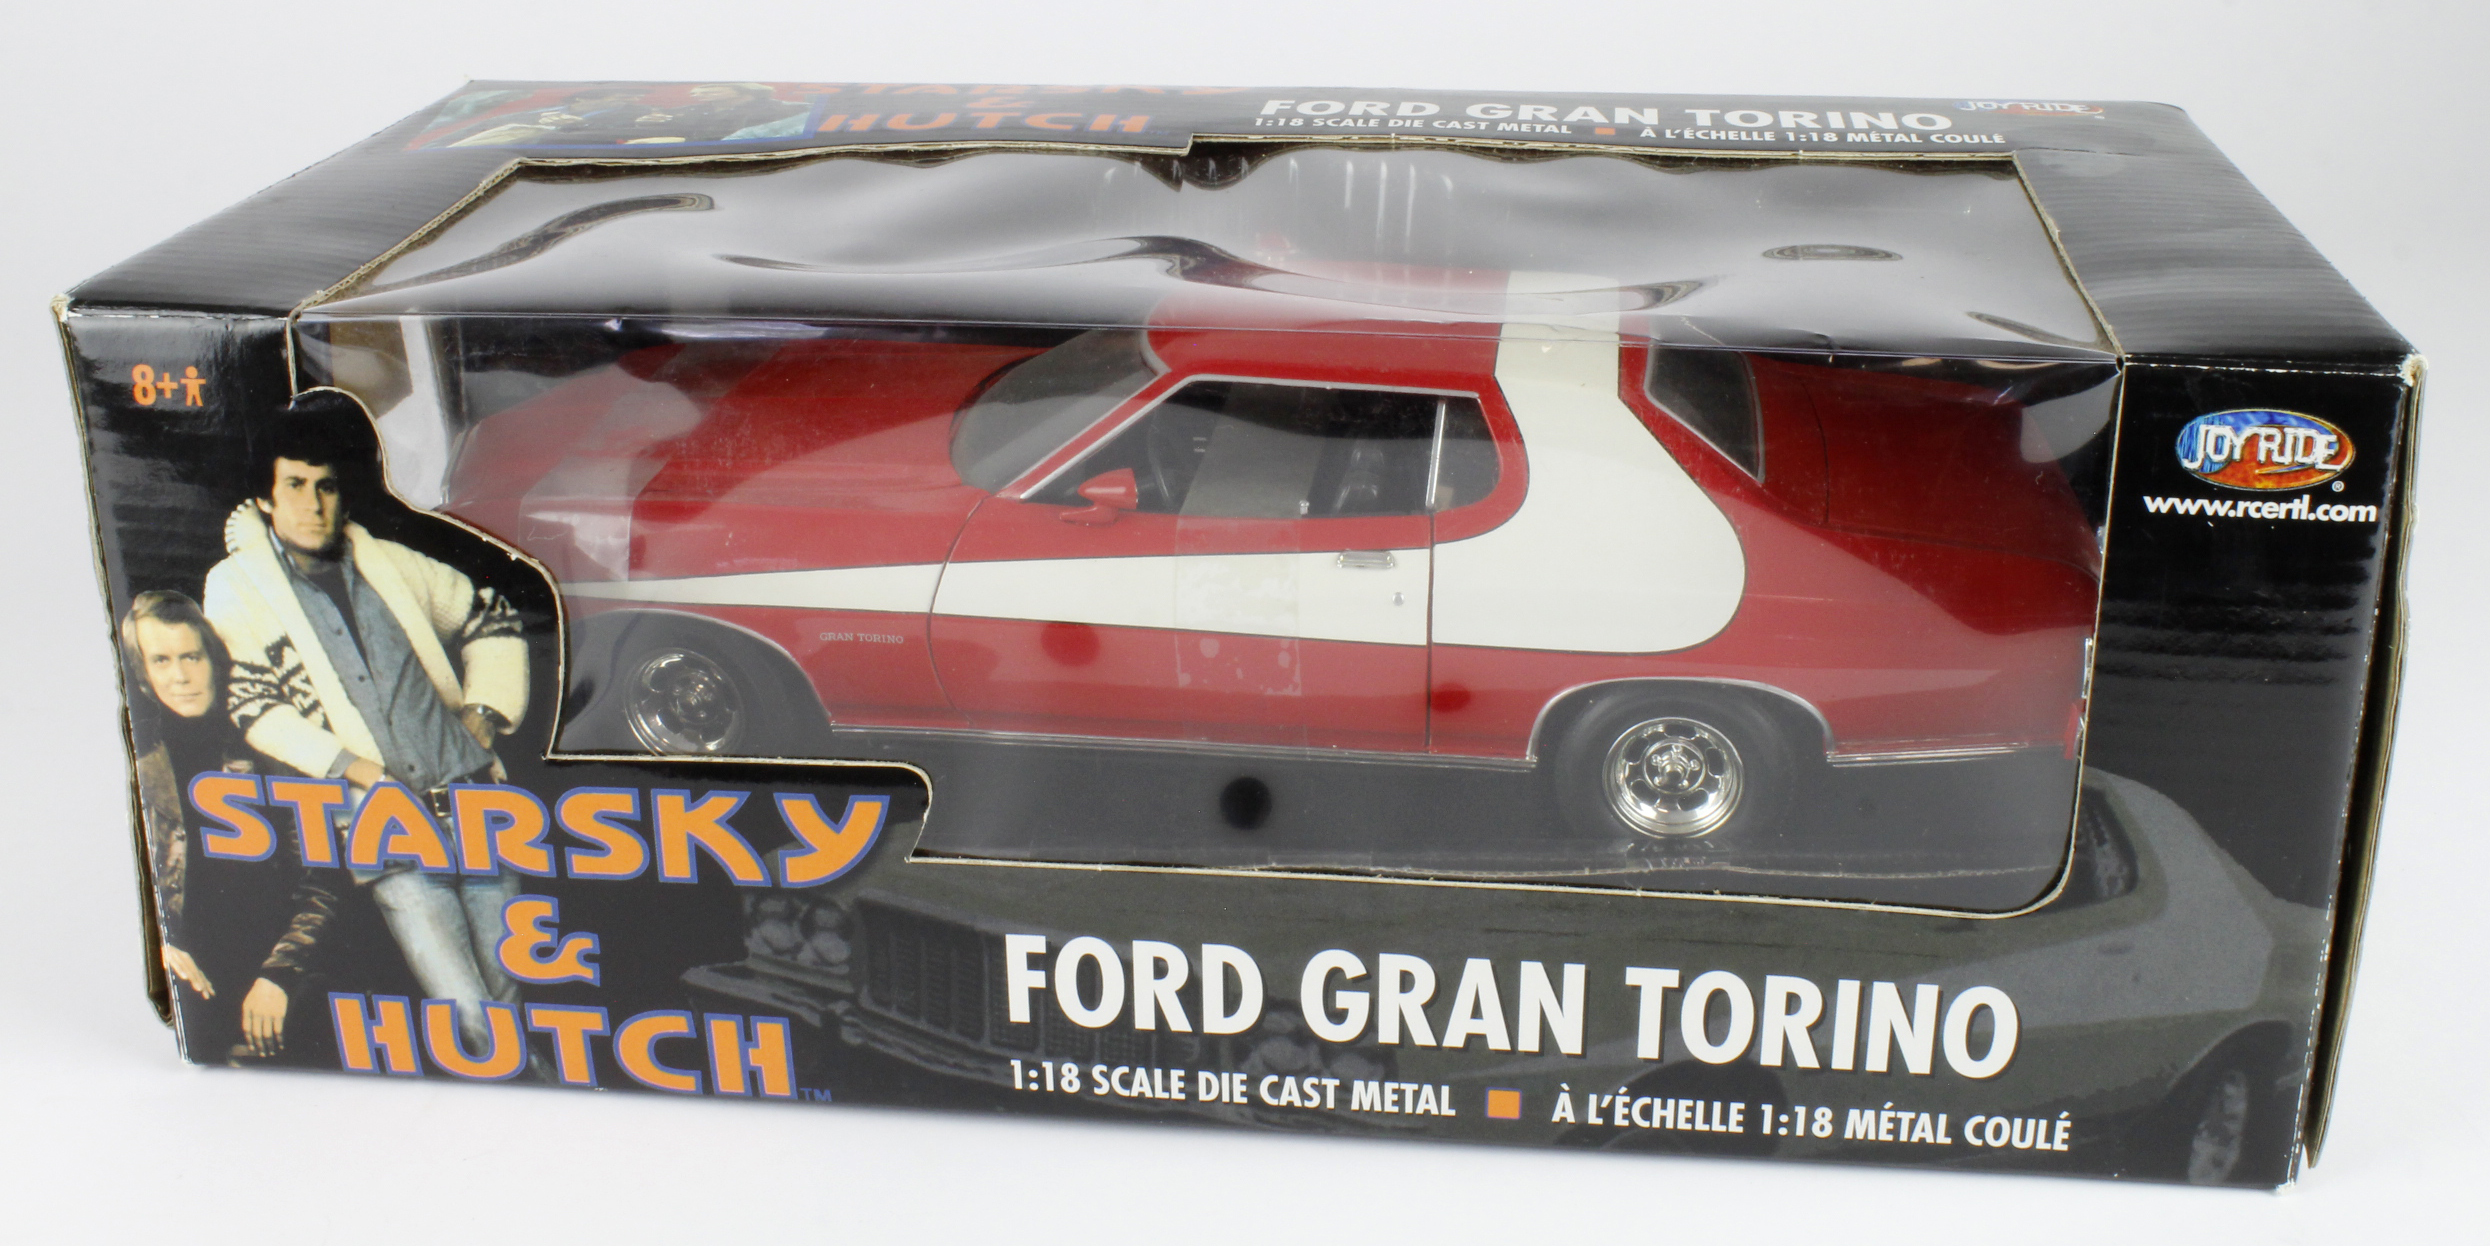 Ertl Joyride 1:18 scale diecast Starsky & Hutch Ford Gran Torino, contained in original box